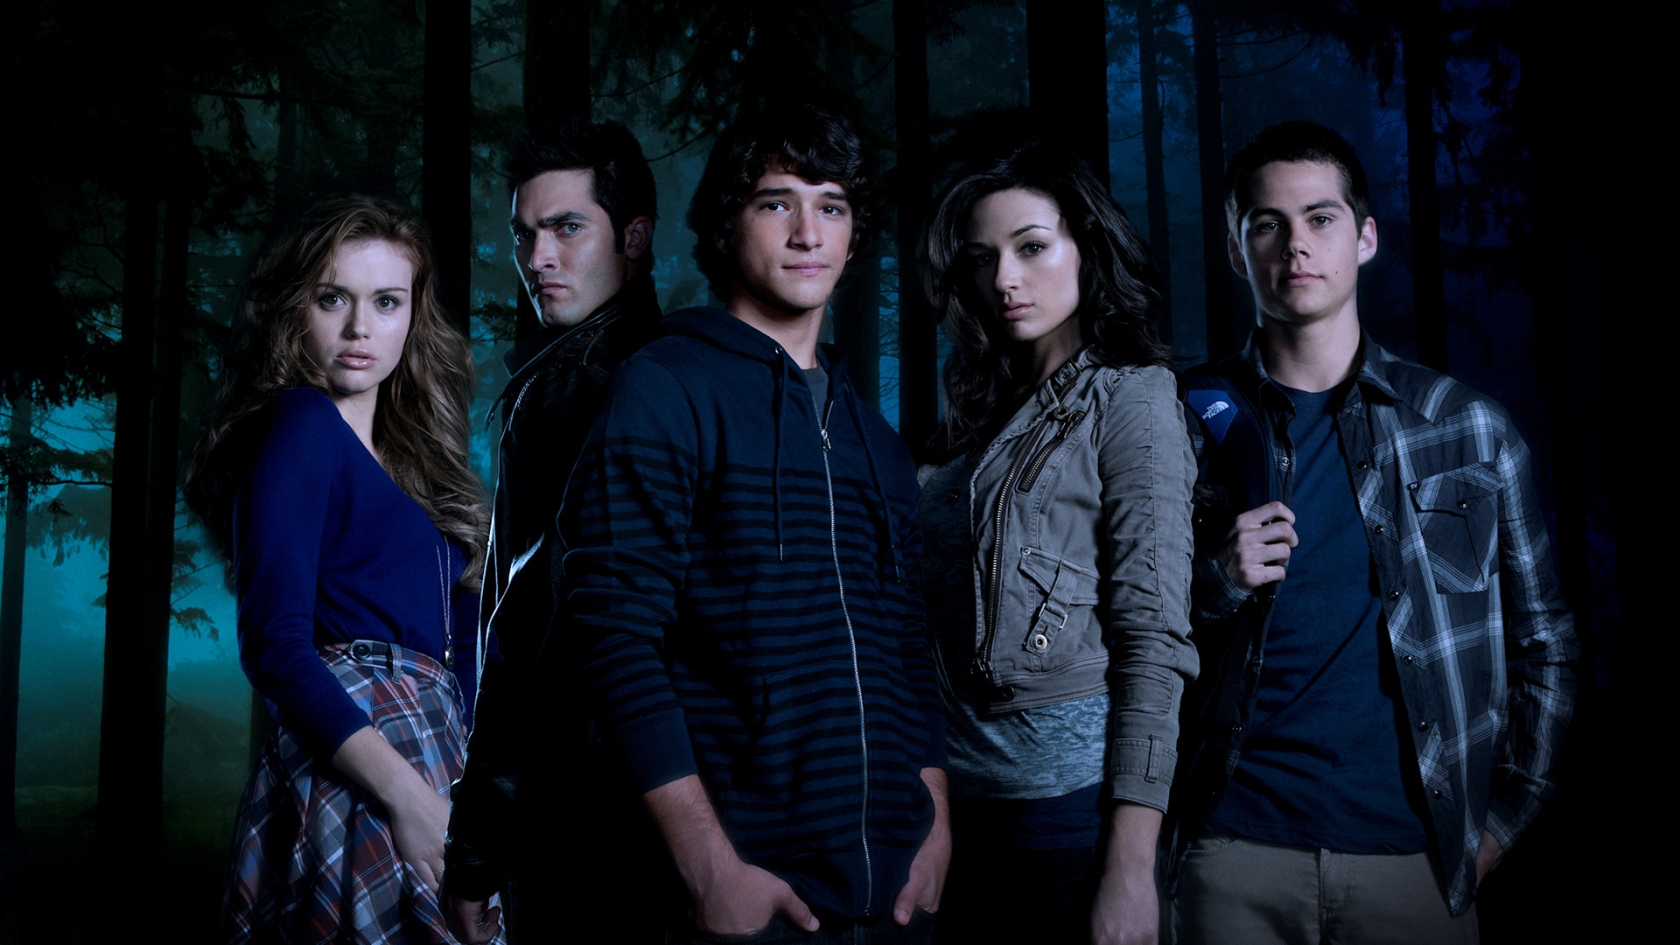 Teen Wolf Cast for 1680 x 945 HDTV resolution